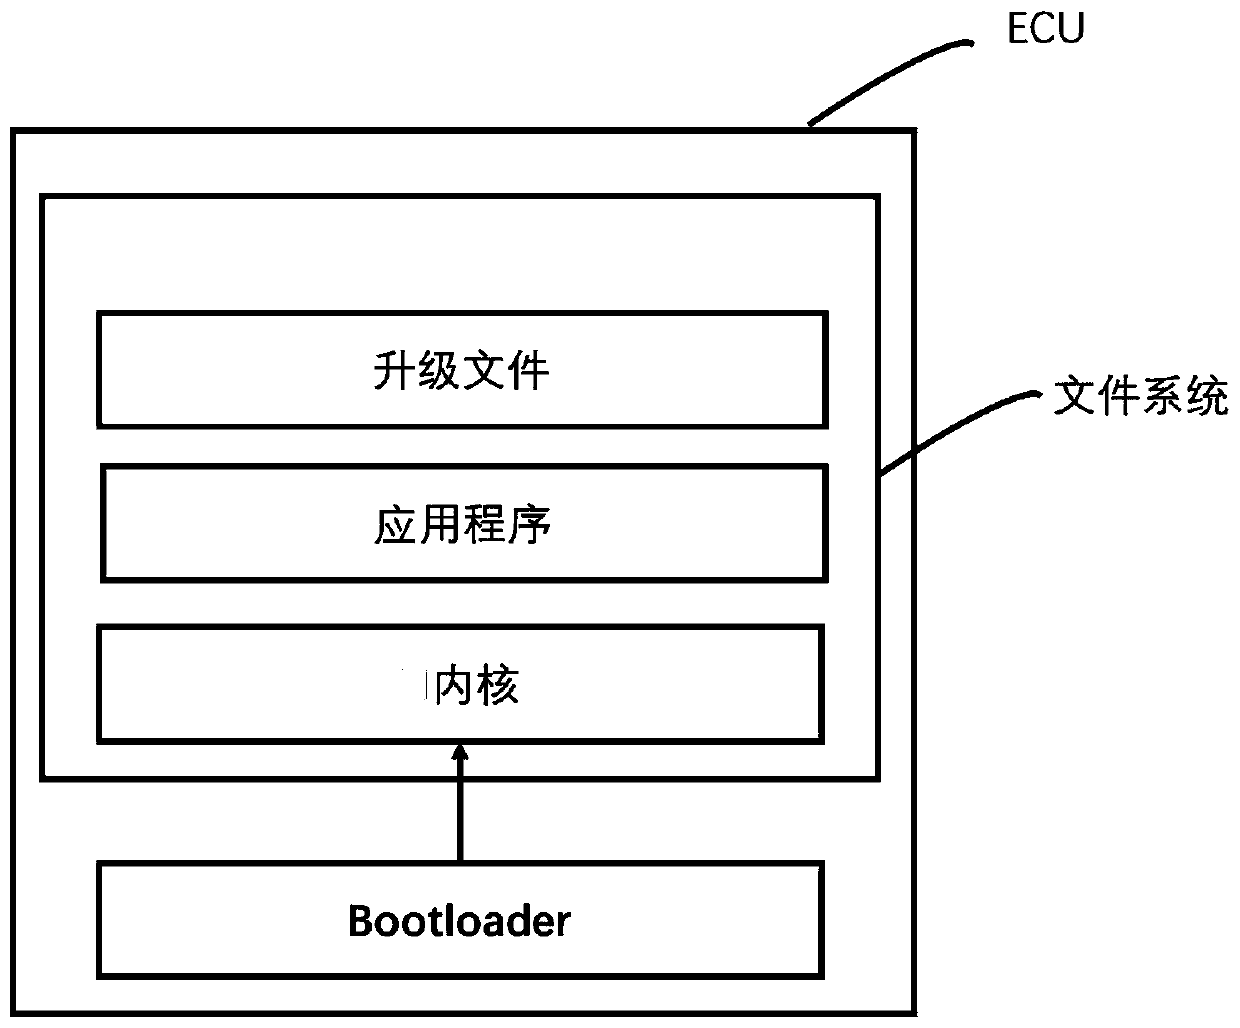 ECU updating method and system based on file system